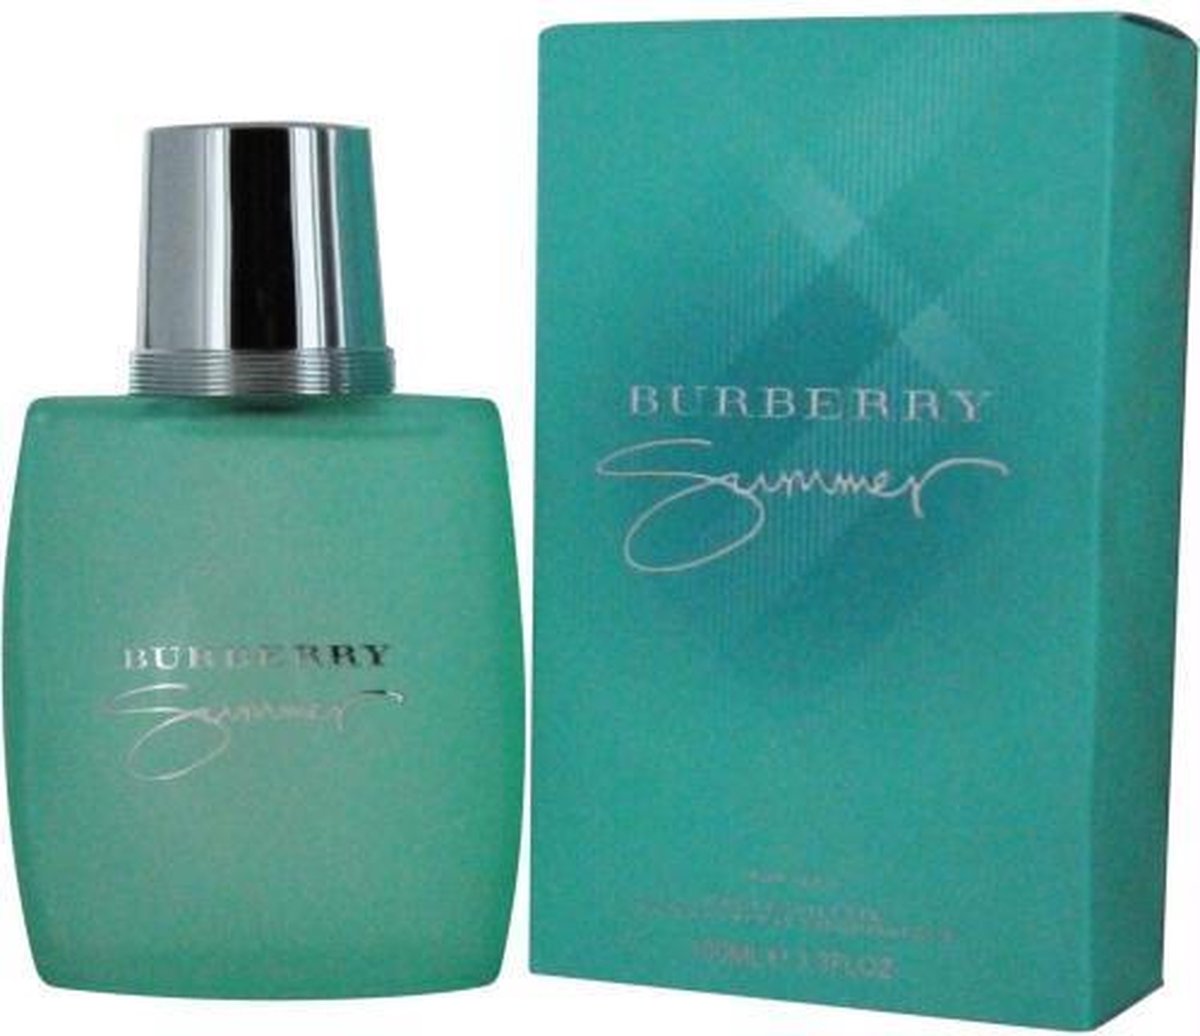 Burberry Summer by Burberry 100 ml - Eau De Toilette Spray (2013)